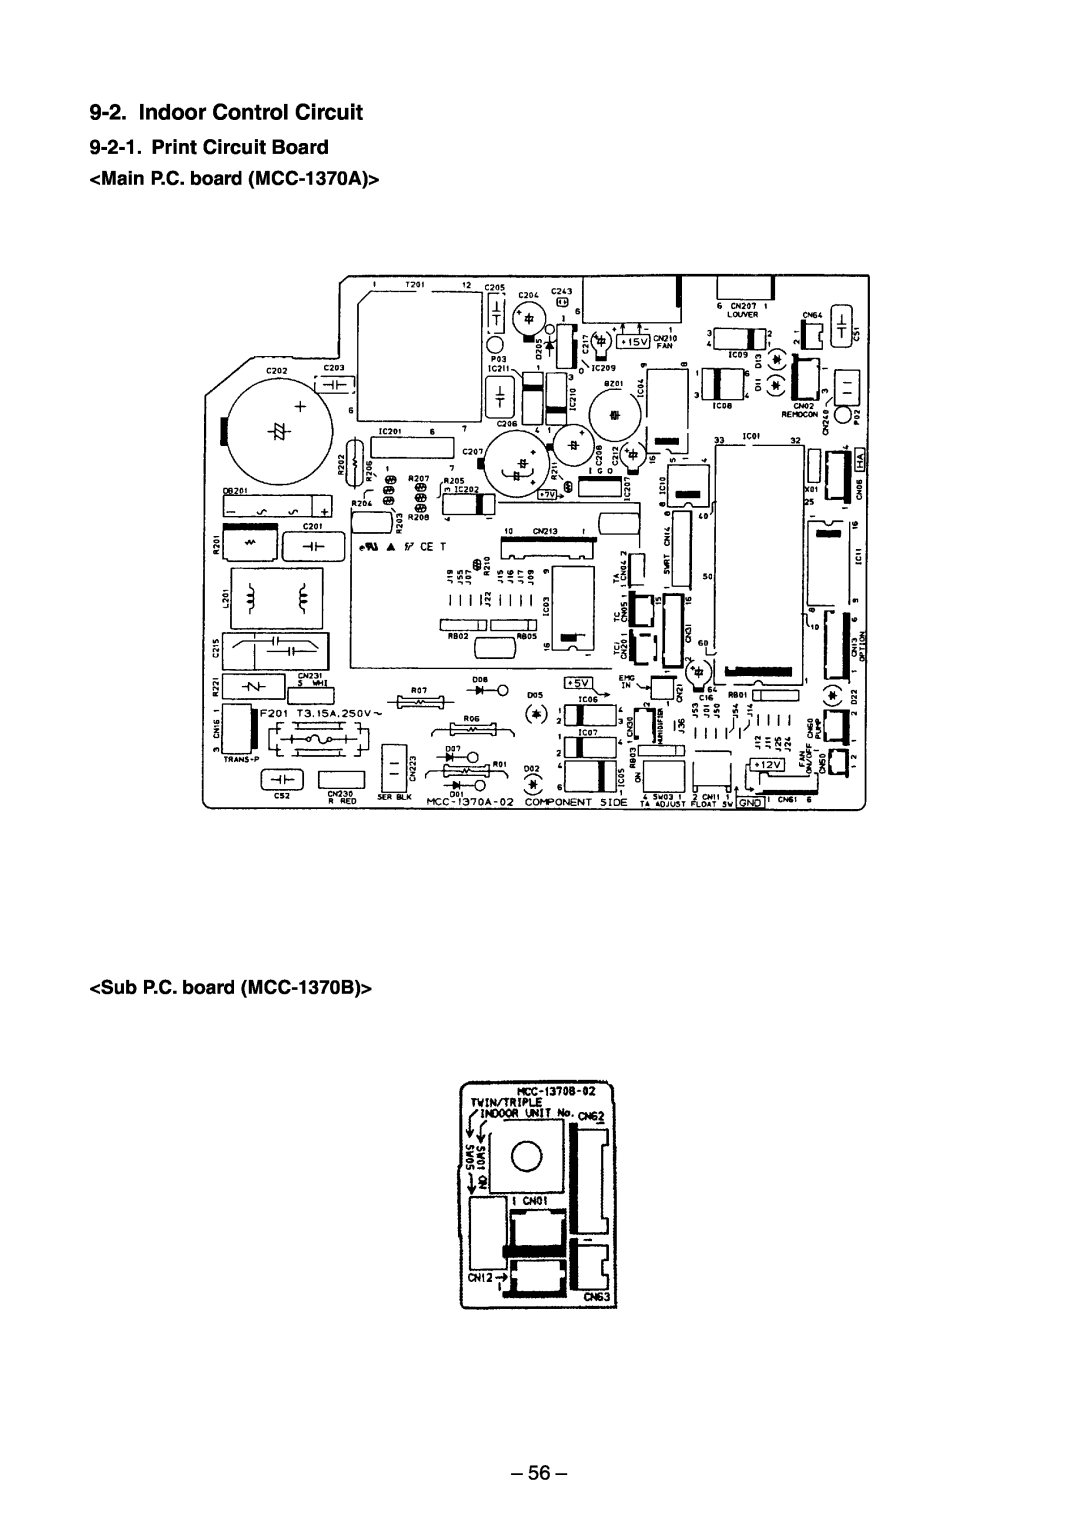 Toshiba RAV-SM560UT-E Indoor Control Circuit, Print Circuit Board, <Main P.C. board MCC-1370A>, <Sub P.C. board MCC-1370B> 